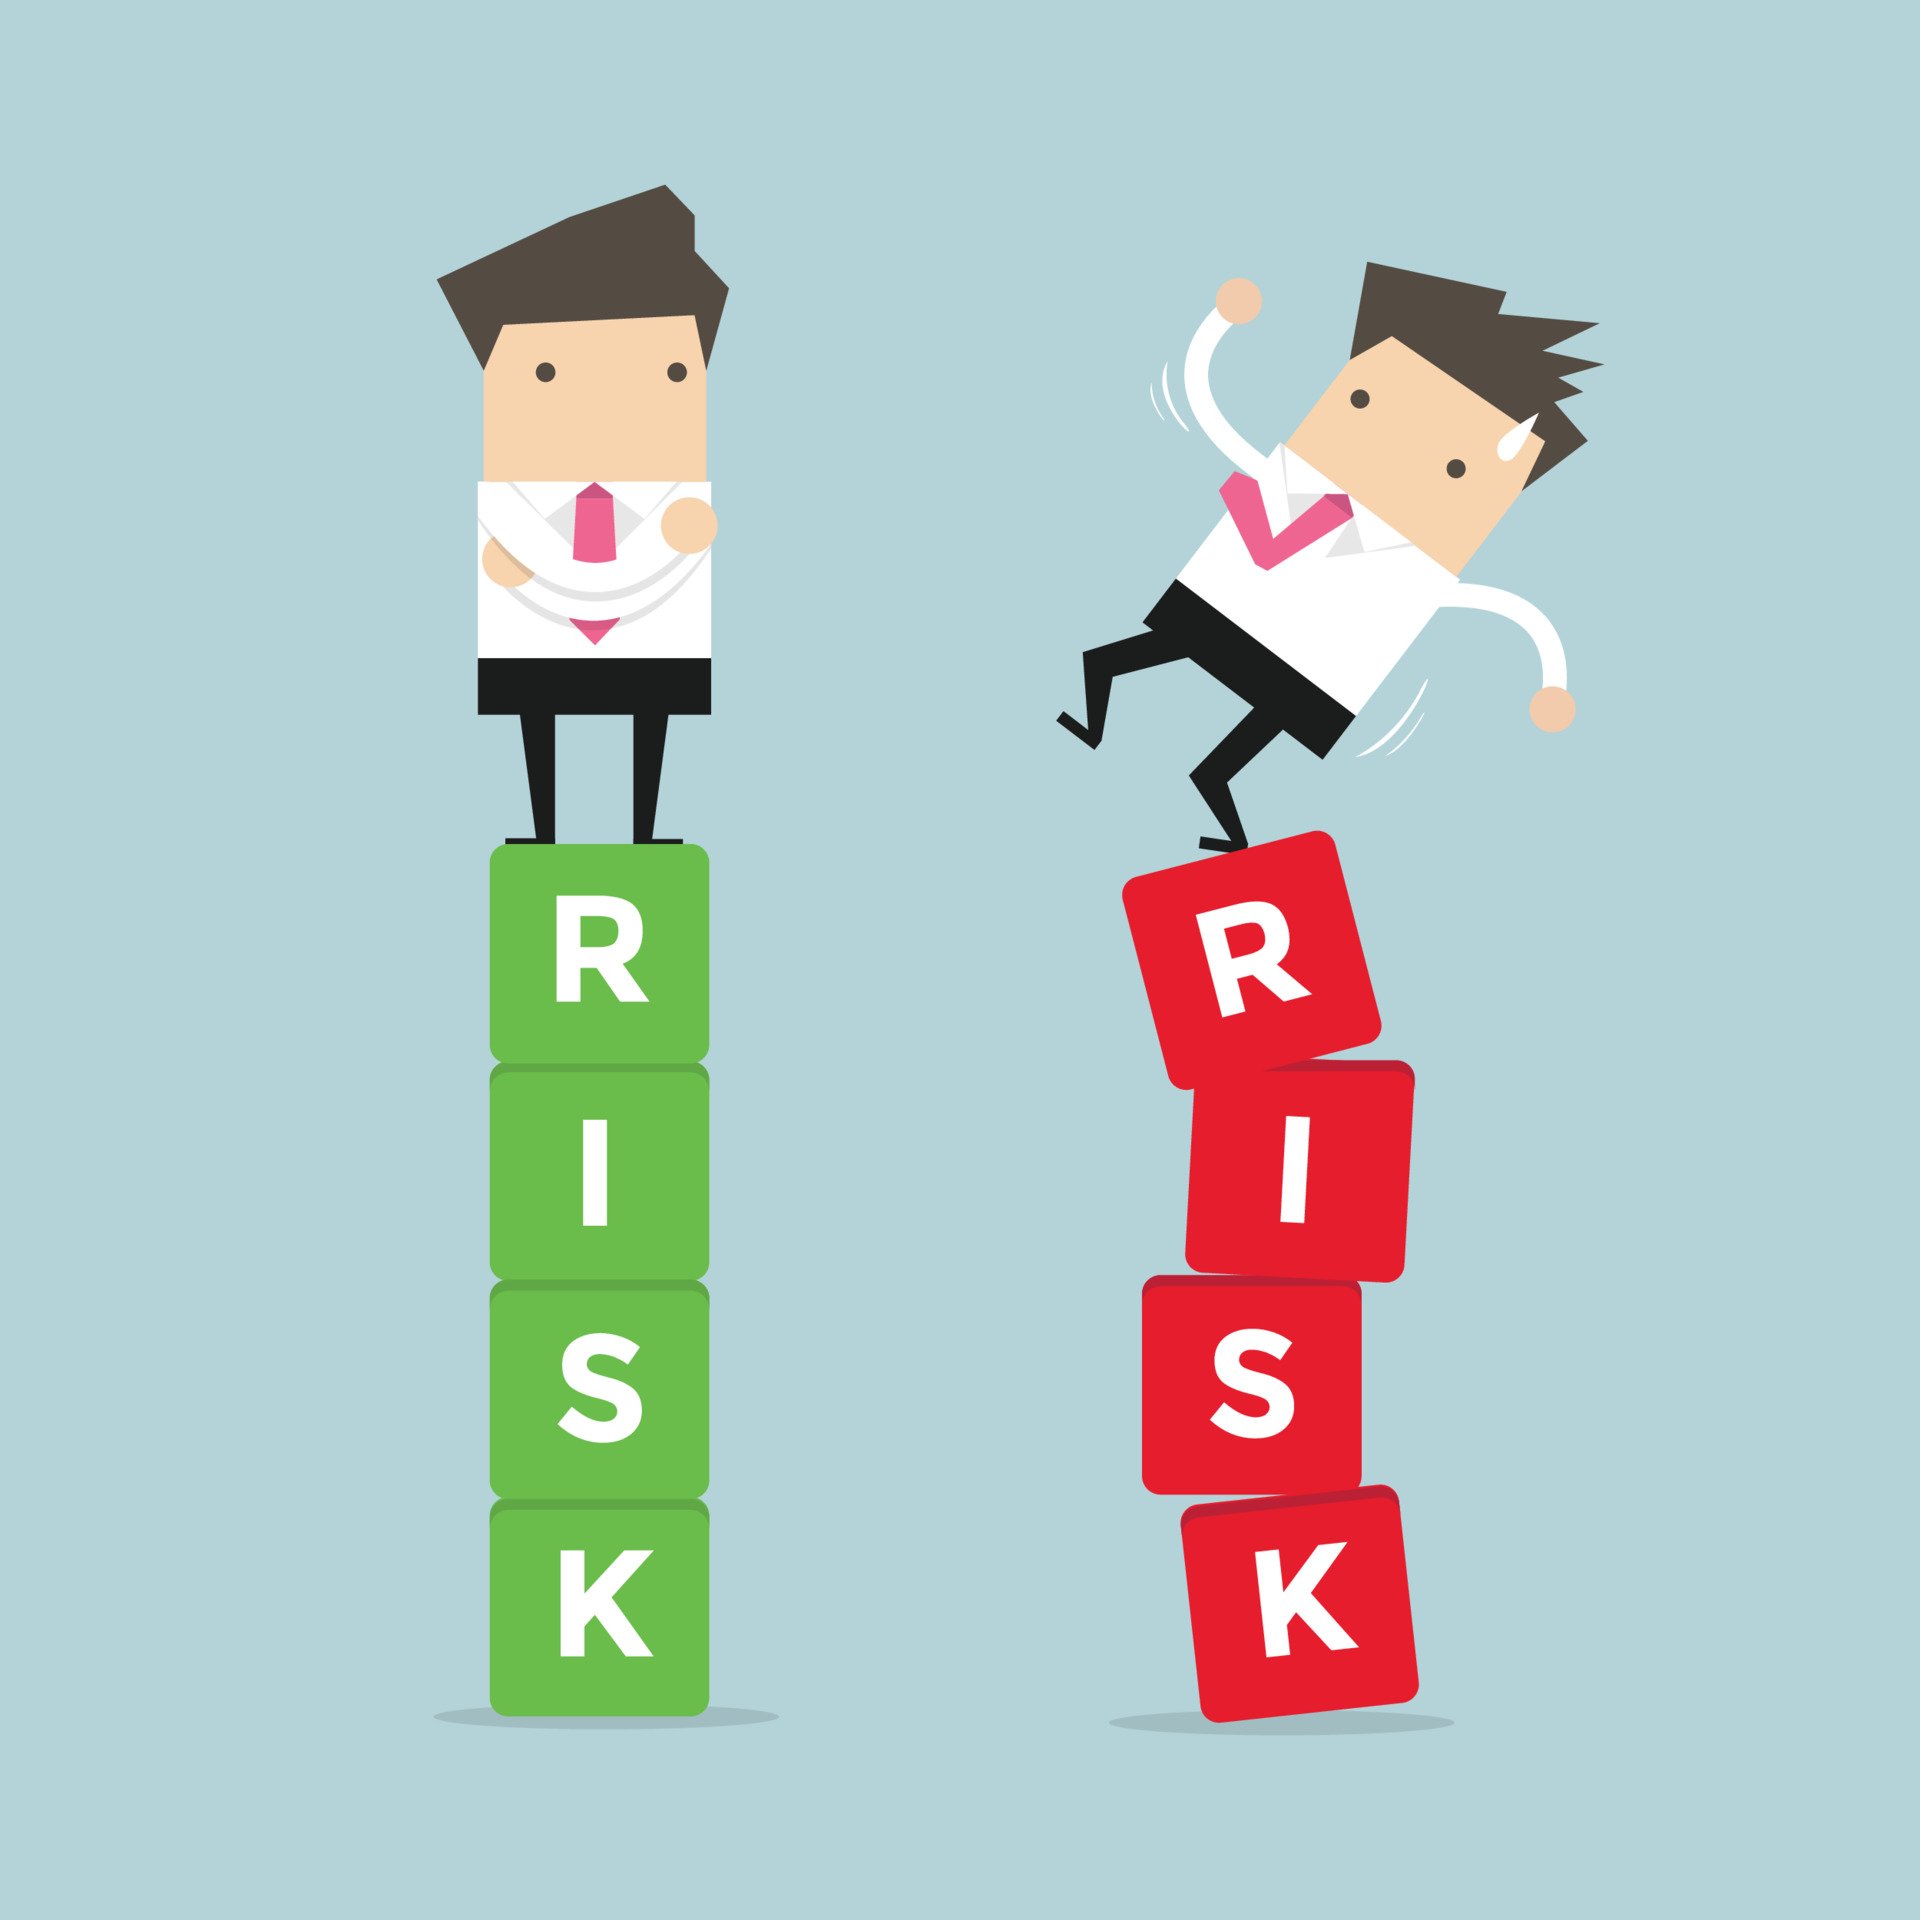 Business risk. Управление рисками человечки. Риски иллюстрация. Оценкарискоа человечки. Управление рисками иллюстрация.